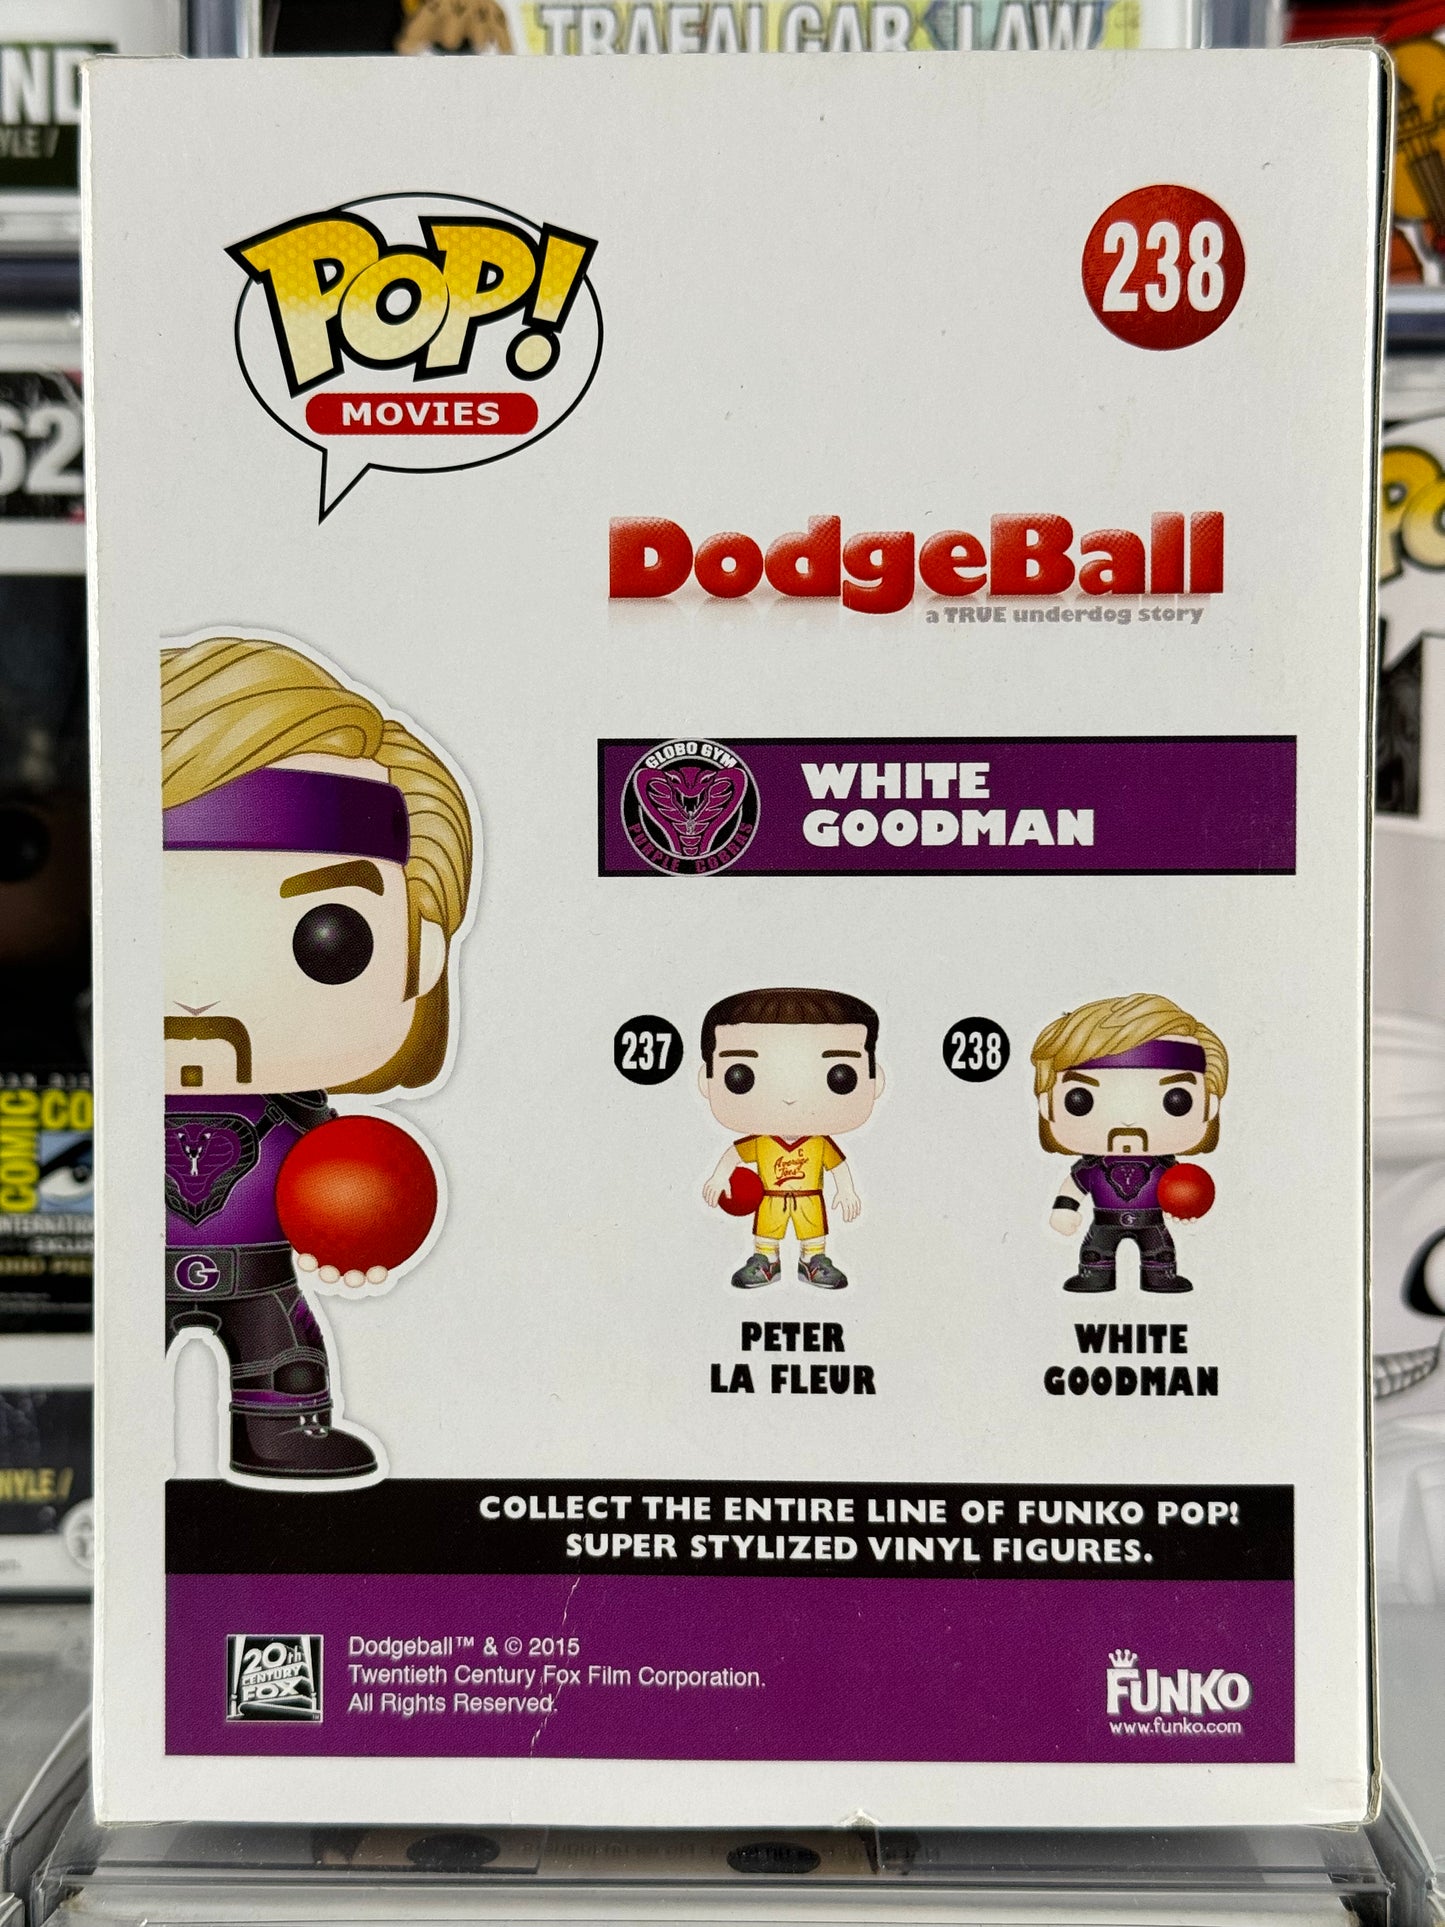 Dodgeball - White Goodman (238) Vaulted